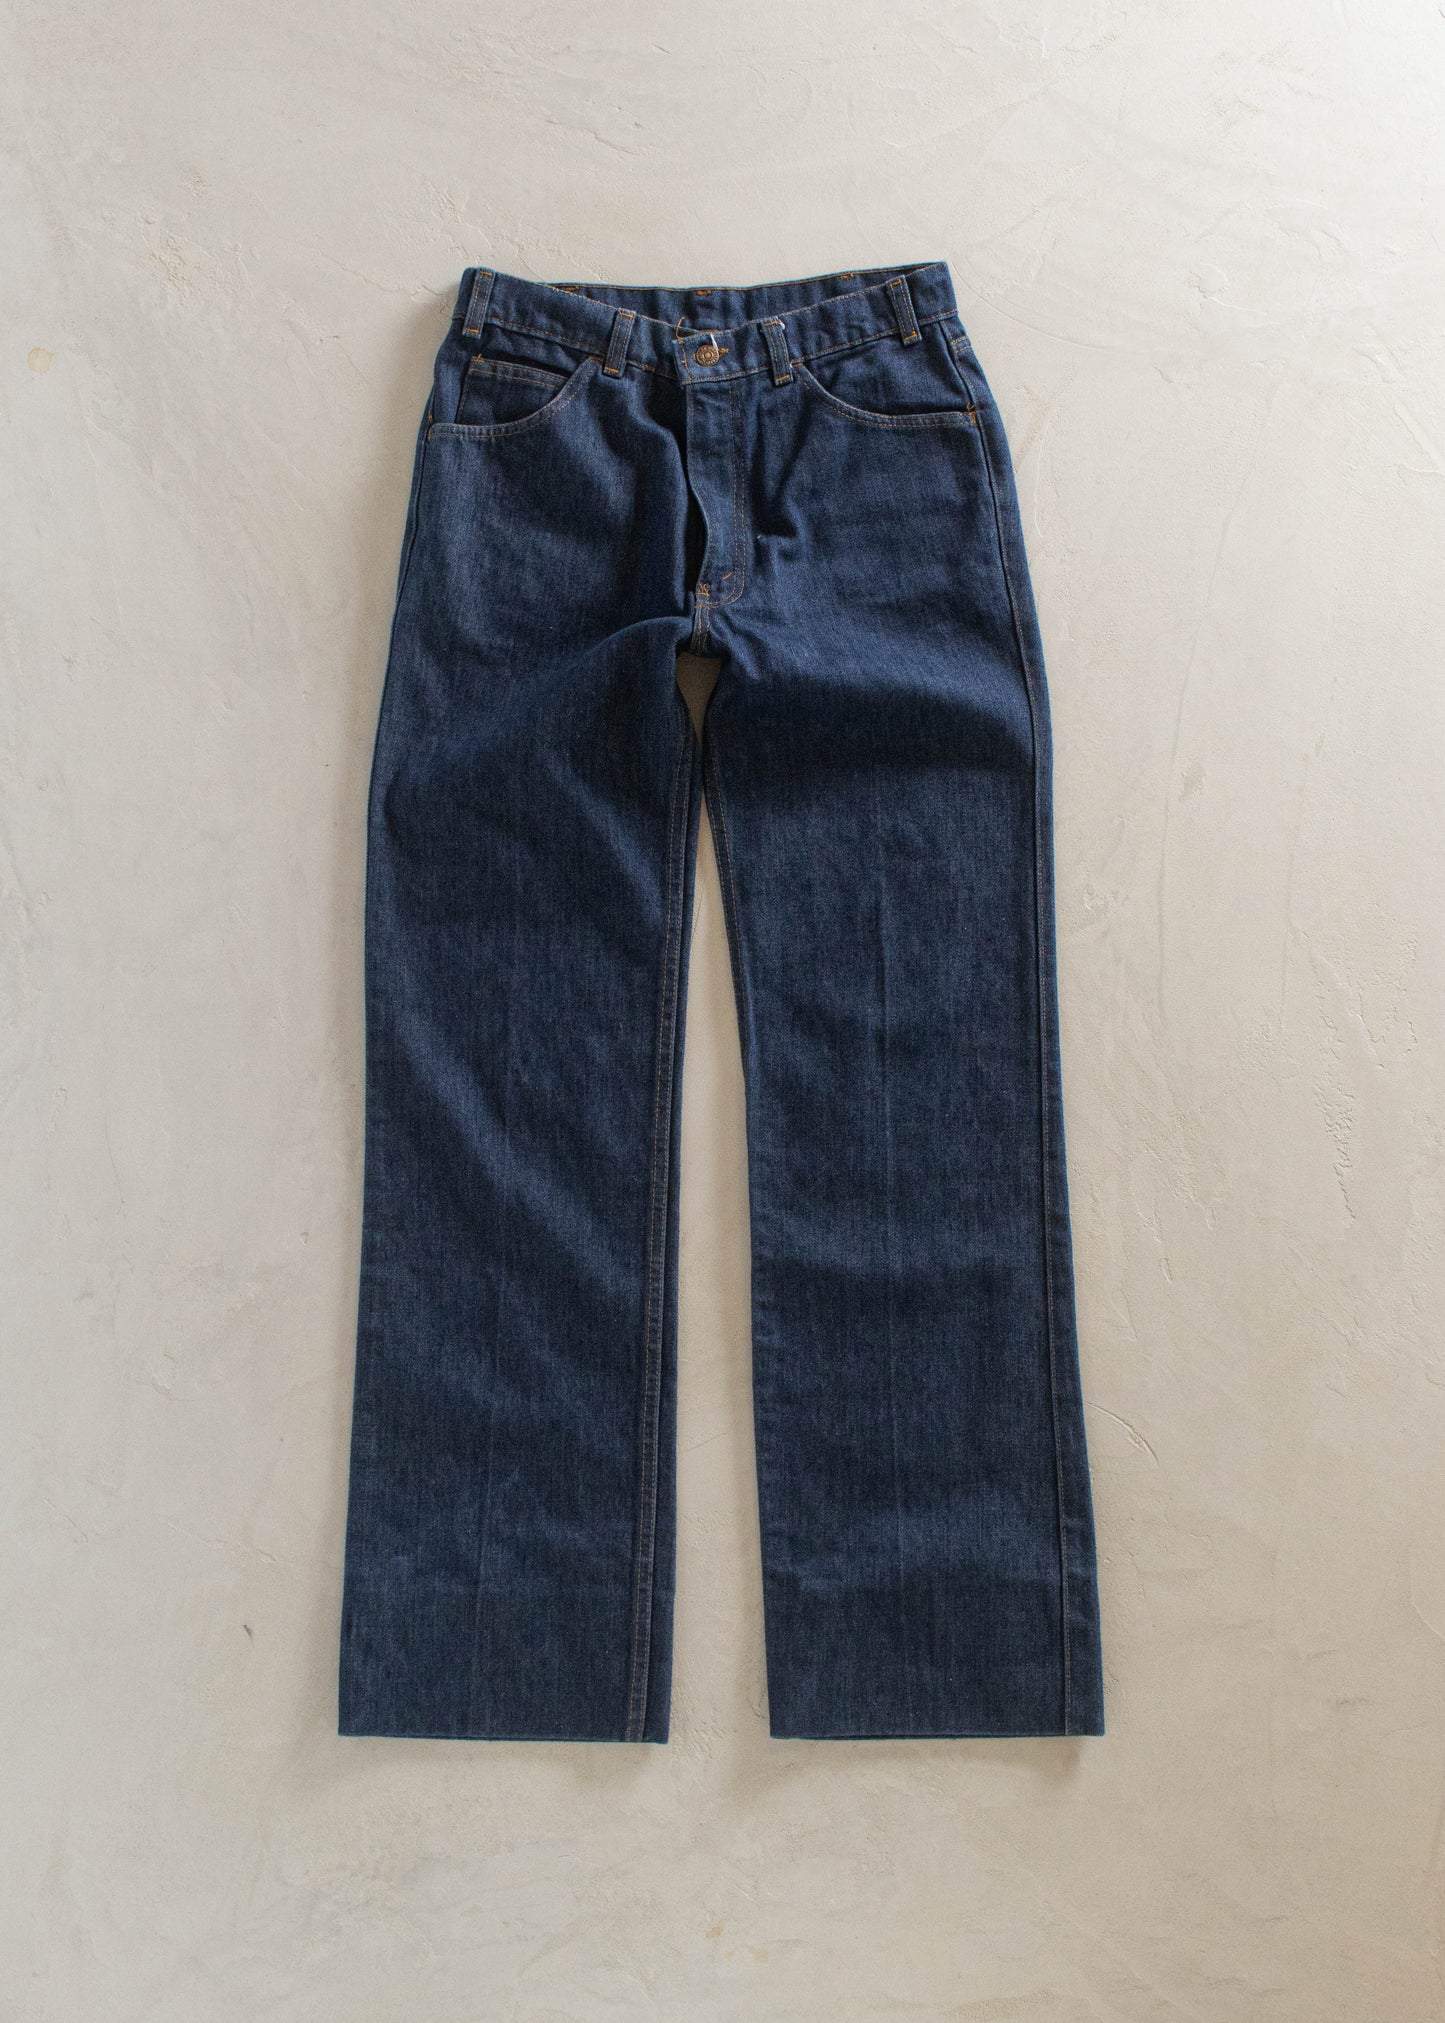 1970s Levi's Darkwash Flare Jeans Size Women's 29 Men's 32